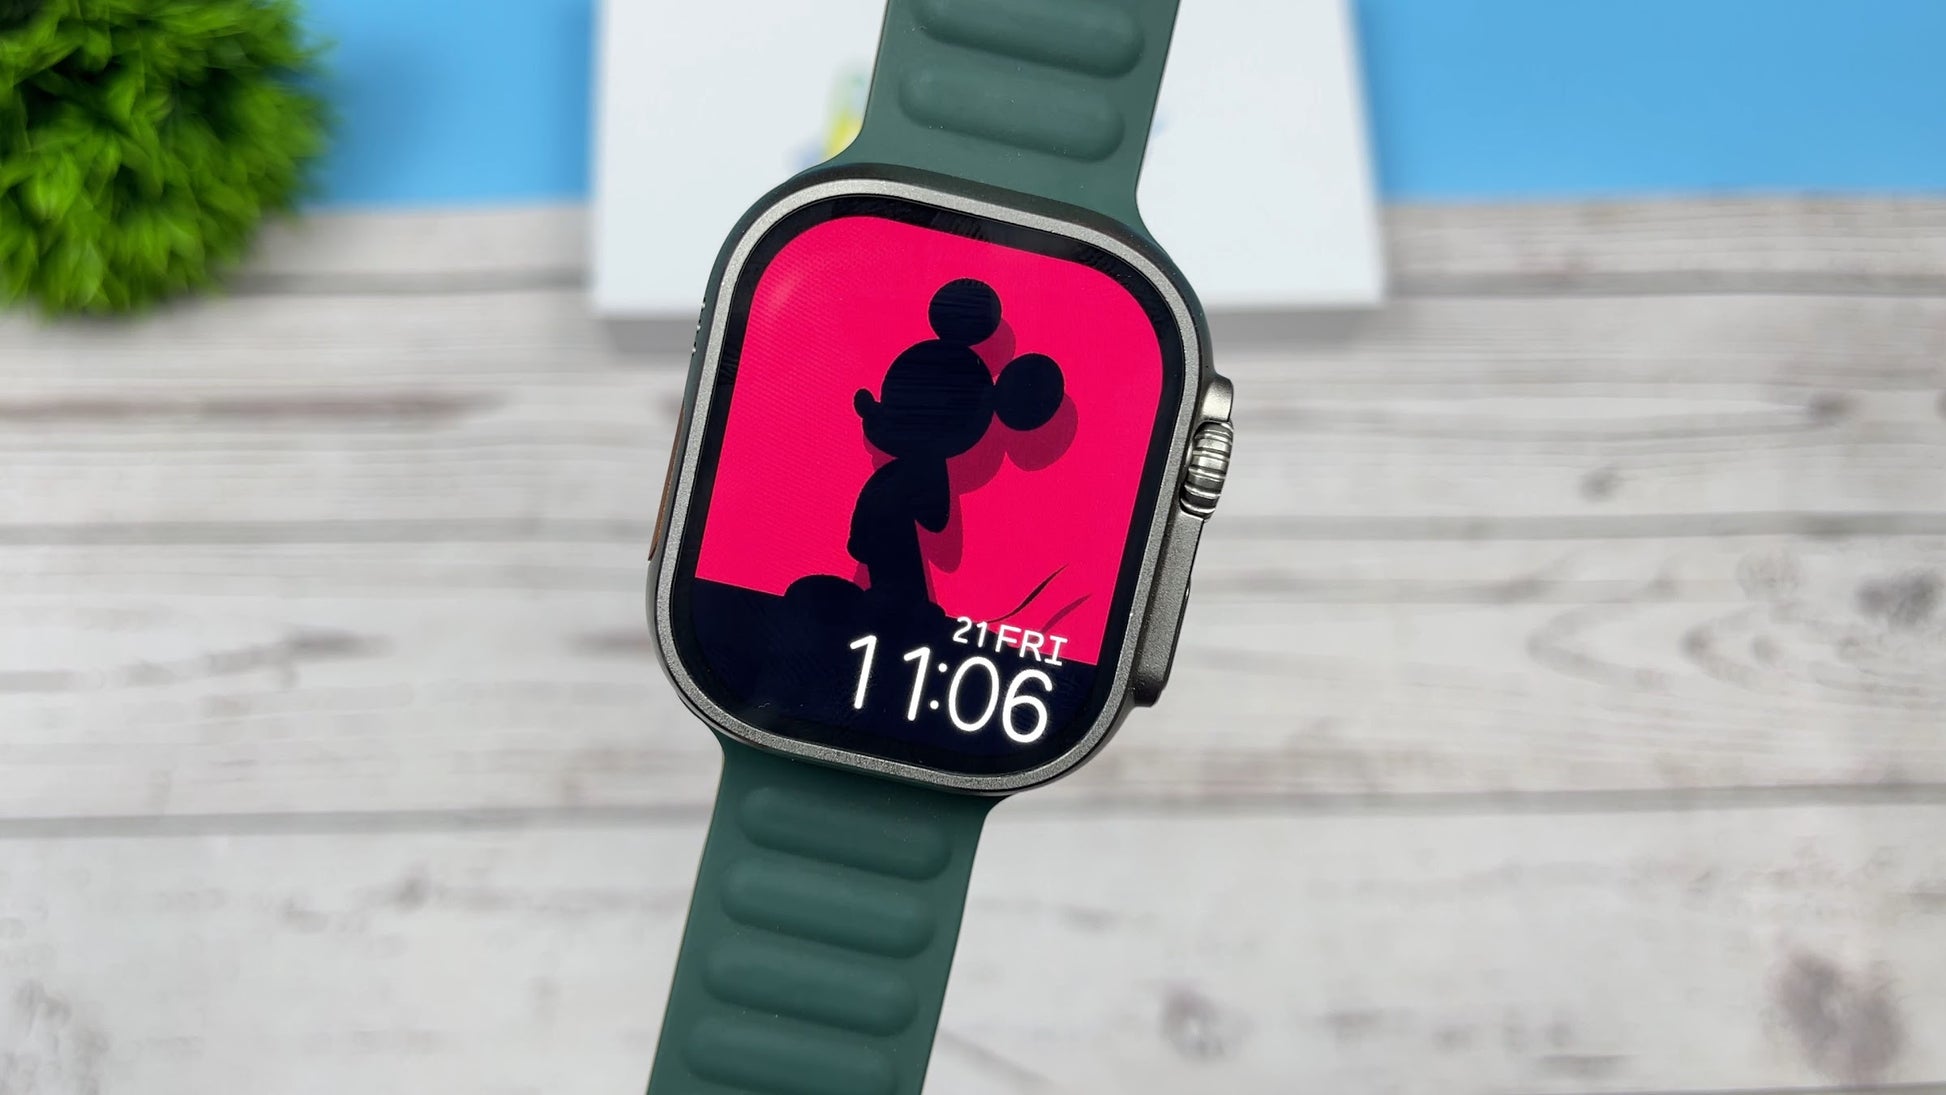 Apple Orange Hello watch 3 smart watch at Rs 4599/piece in